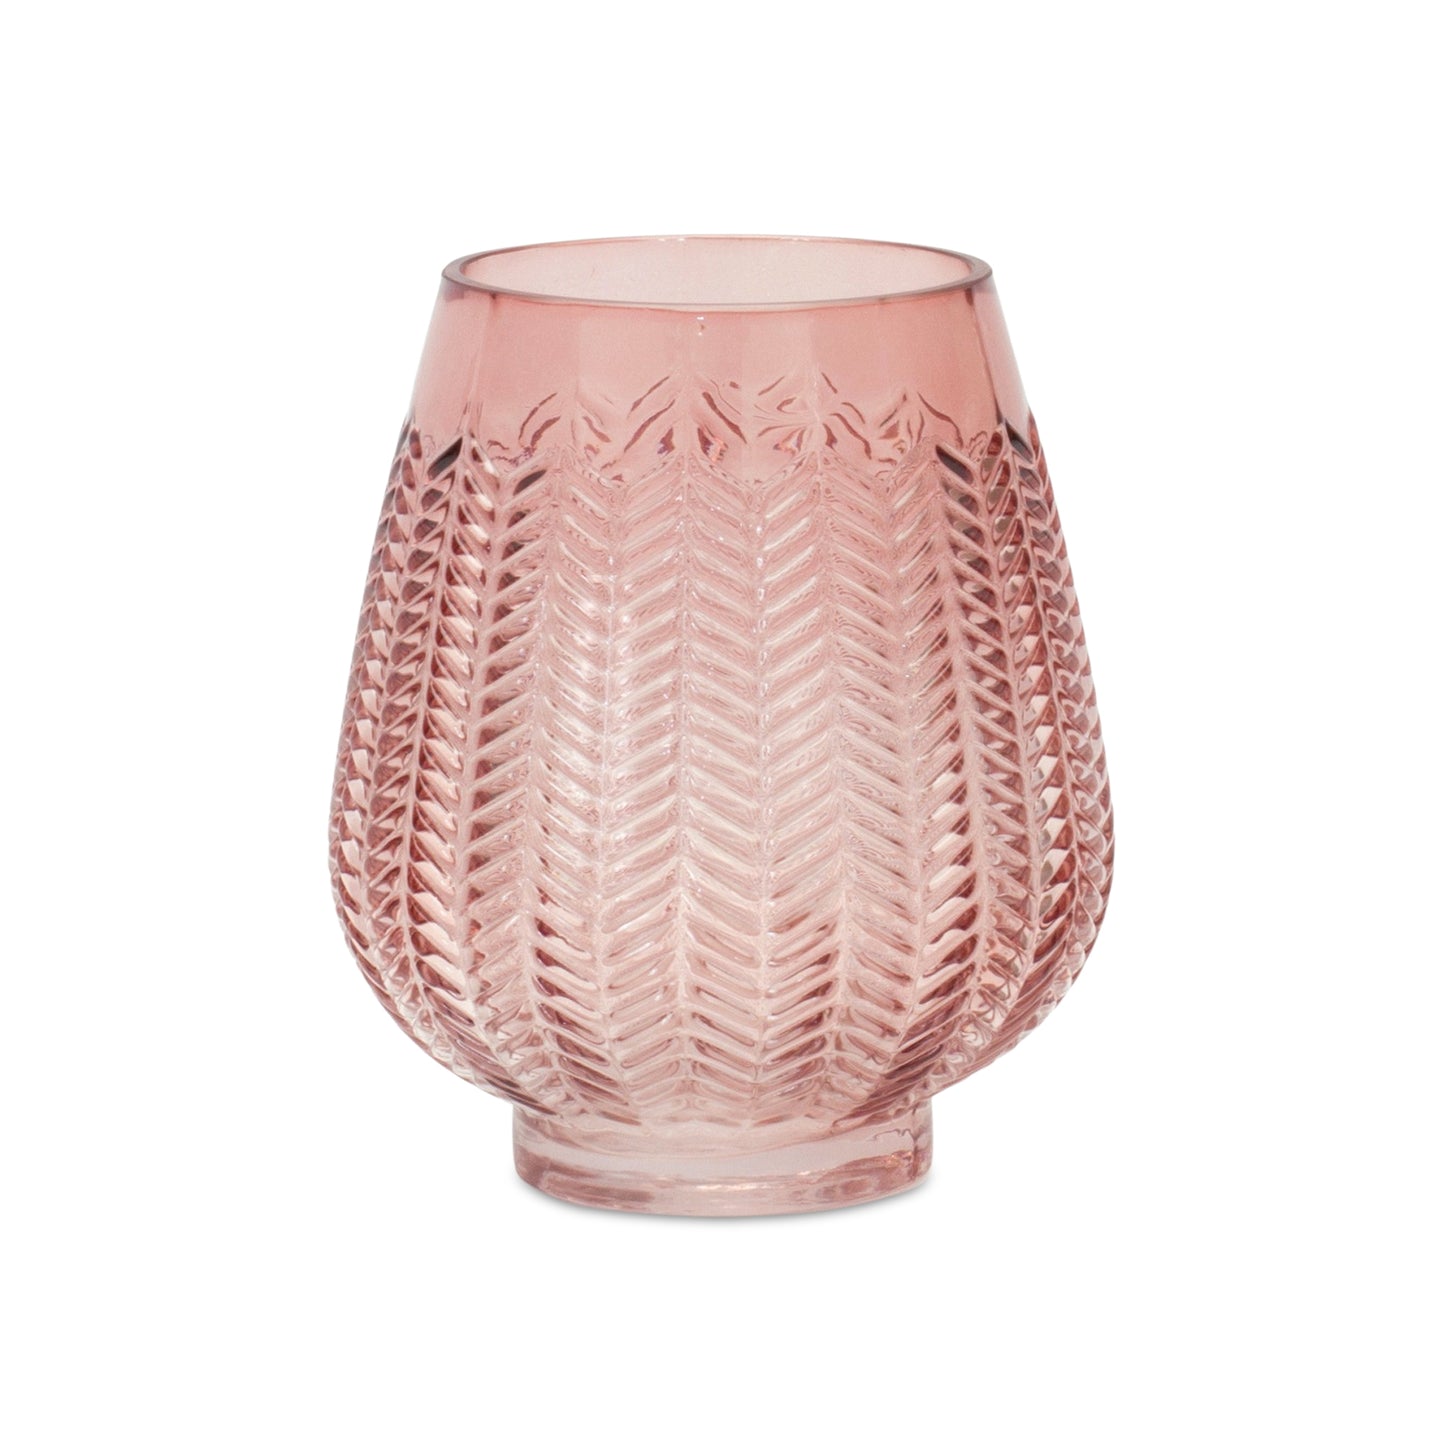 Pink Ribbed Glass Vase or Candle Holder 6"H